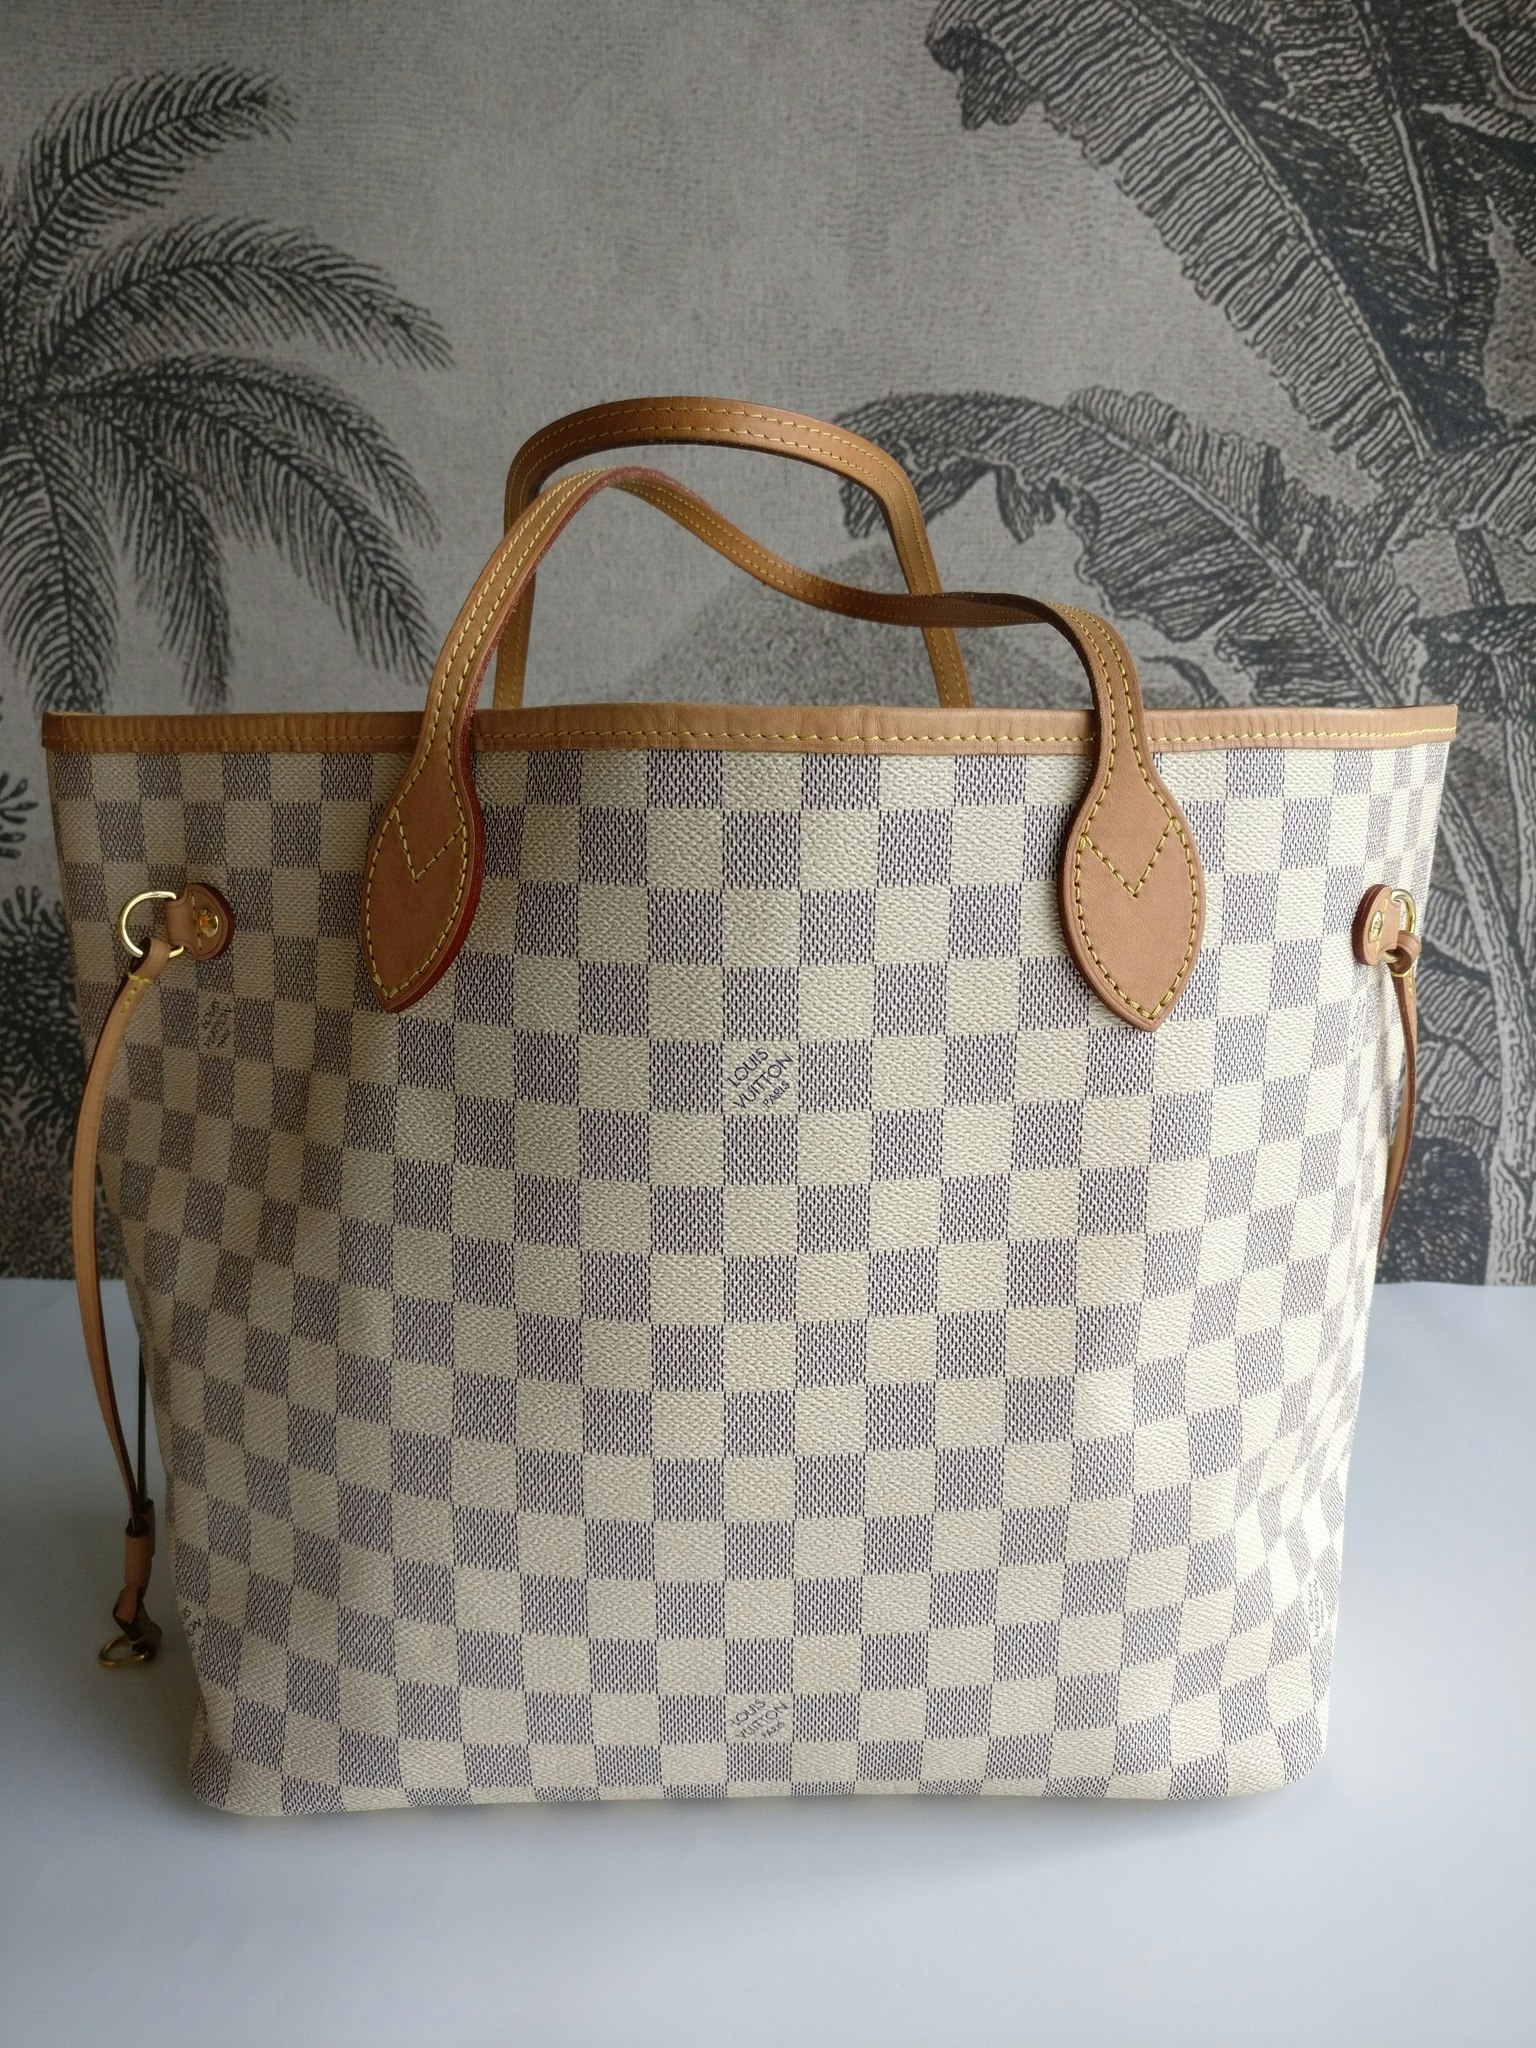 Louis Vuitton Neverfull MM damier azur - Good or Bag